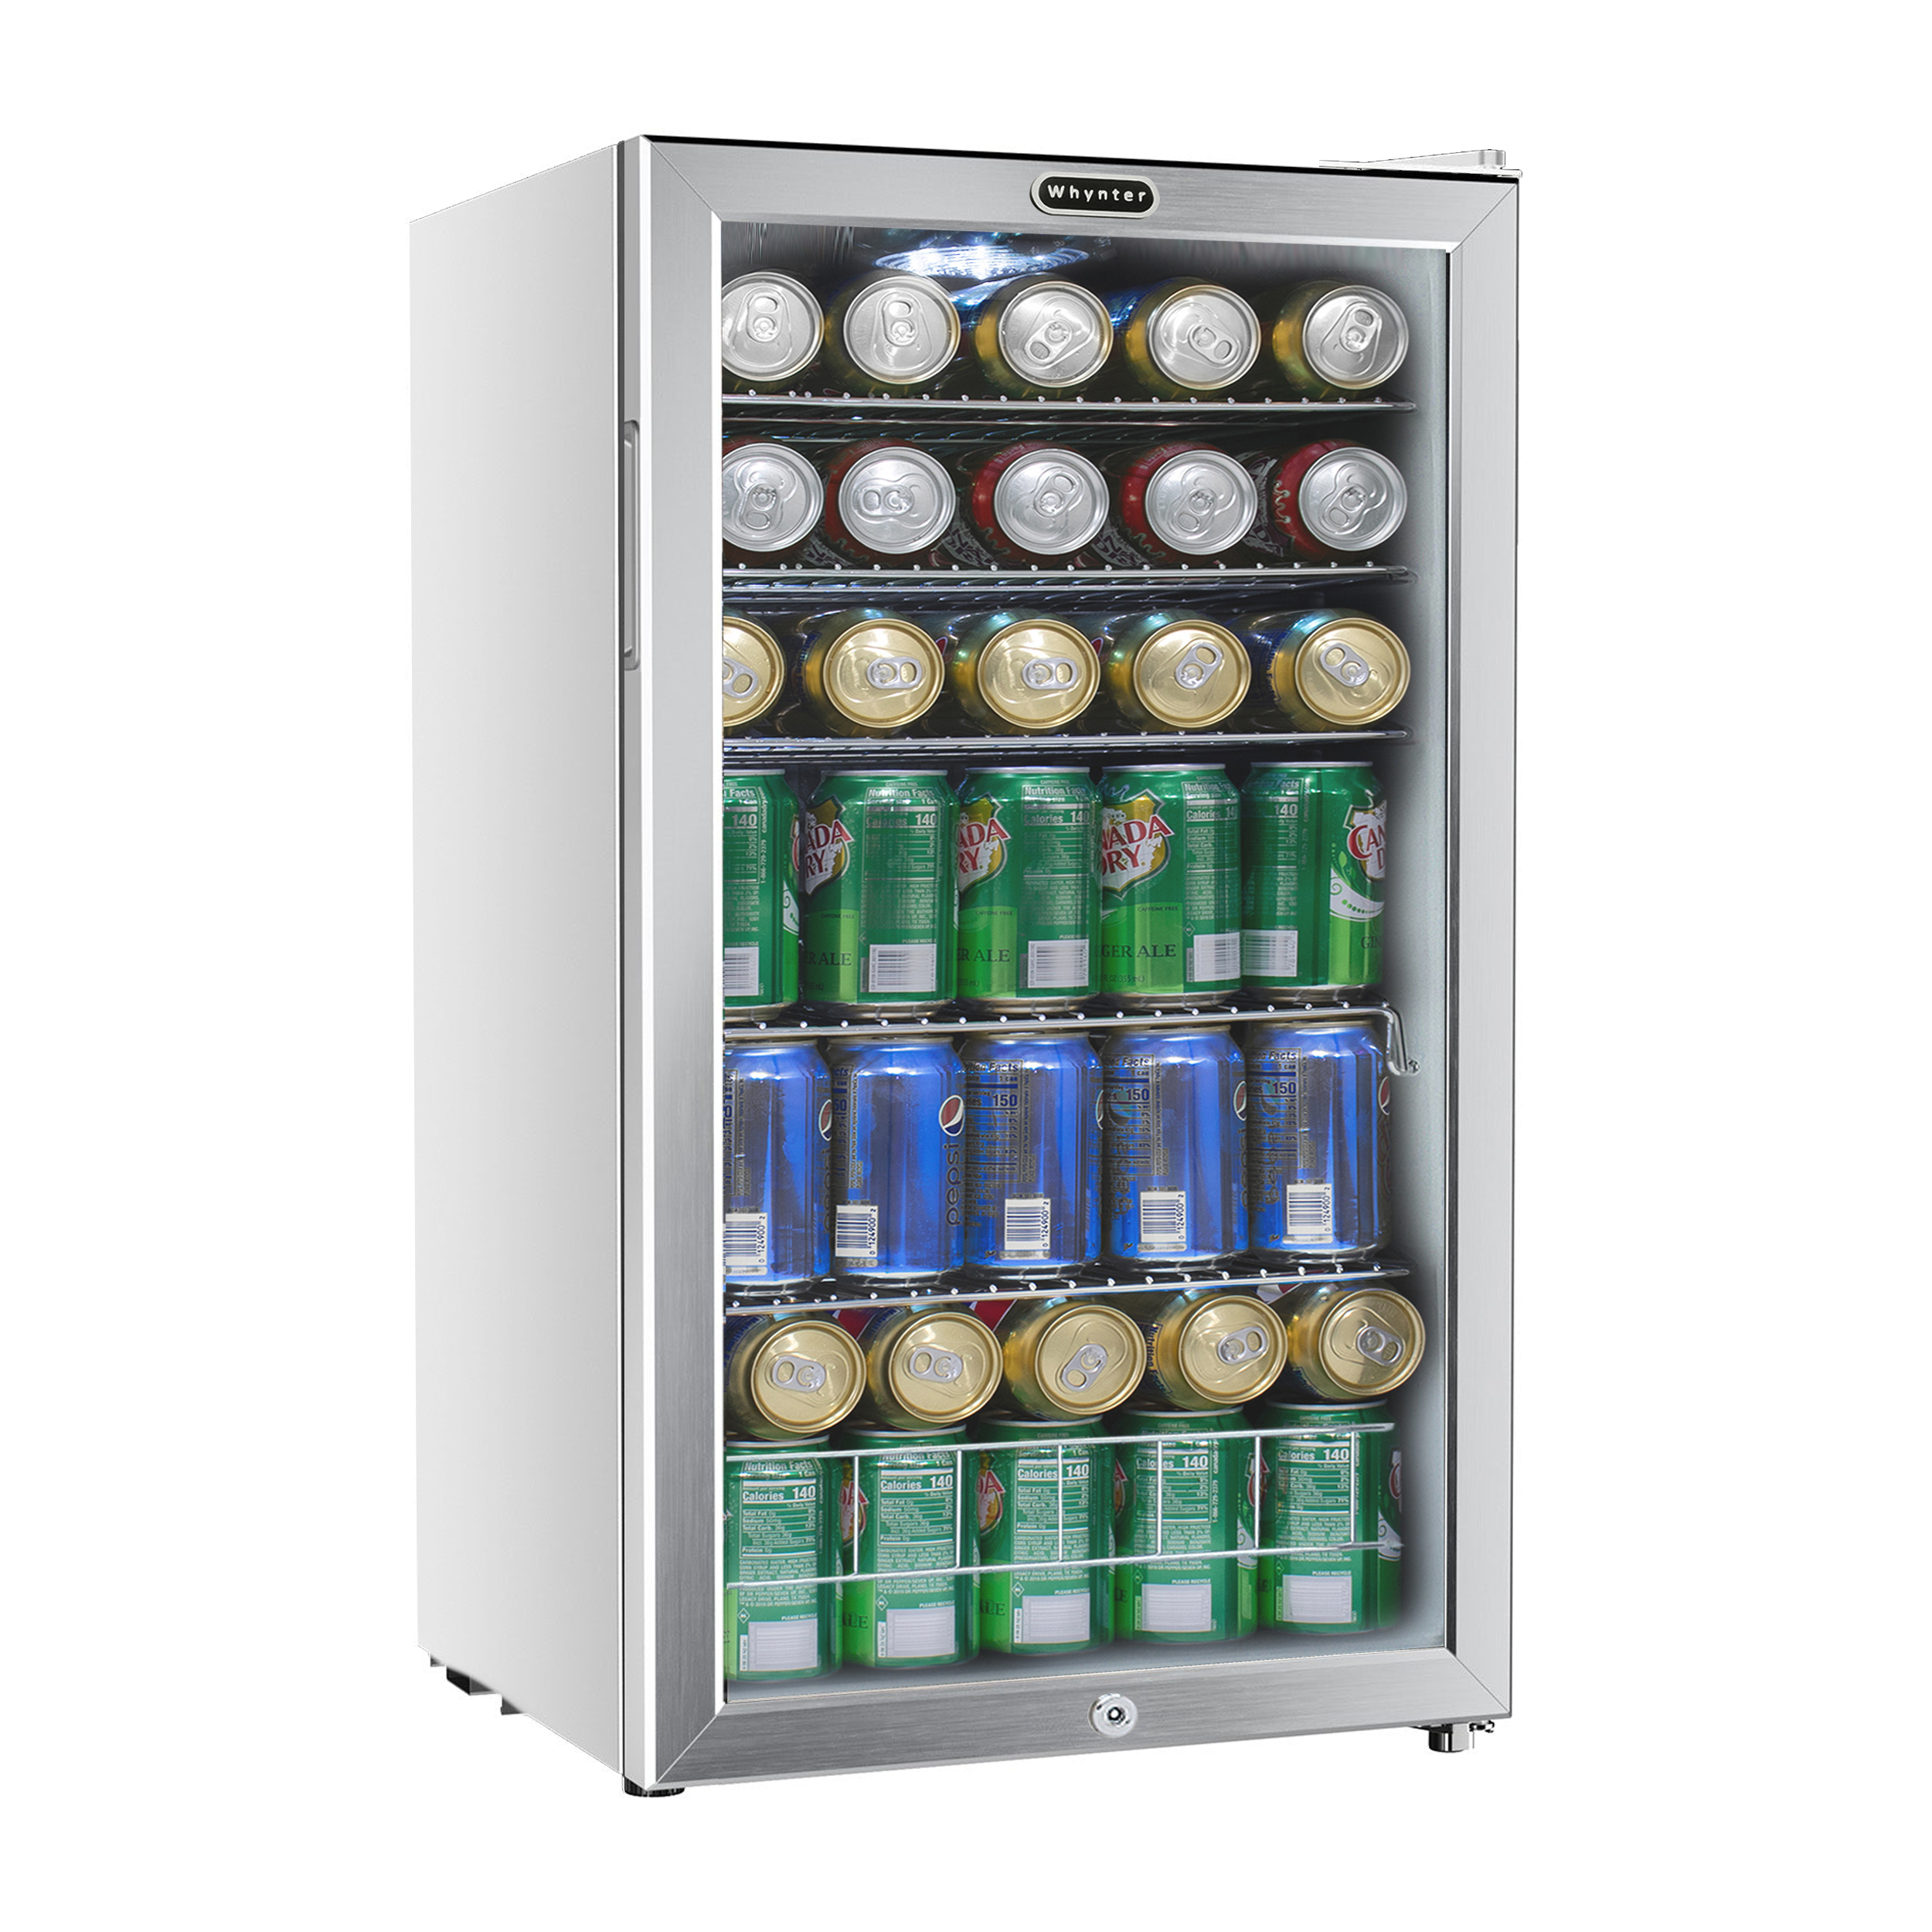 12V Mini Fridge Quiet Compact Refrigerator with Lock Small Cooler